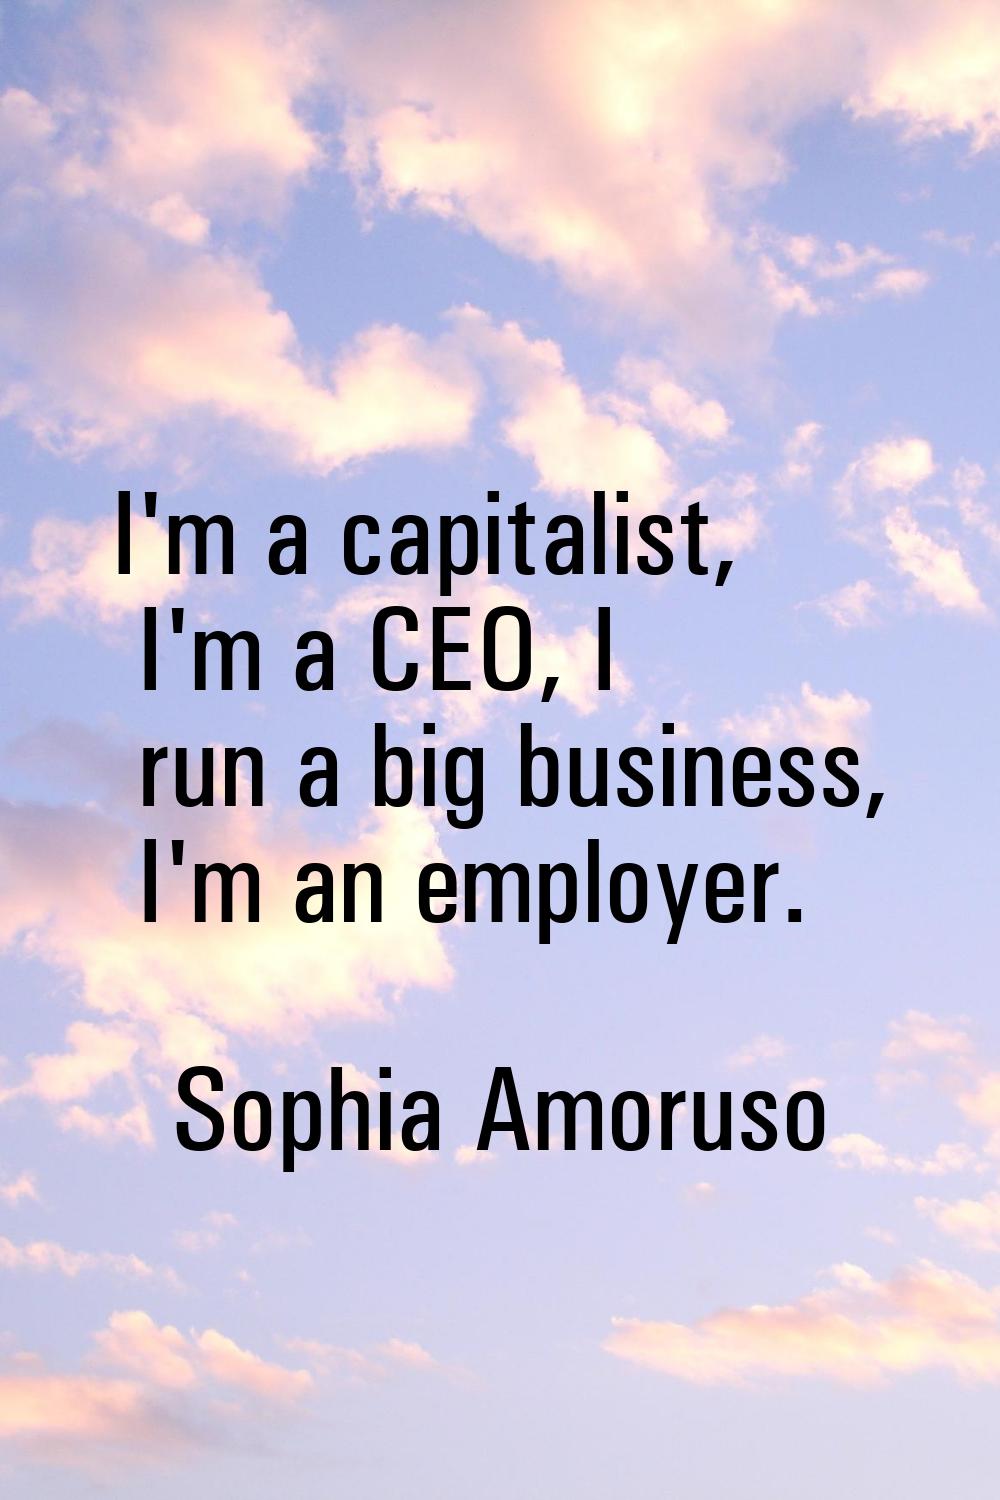 I'm a capitalist, I'm a CEO, I run a big business, I'm an employer.